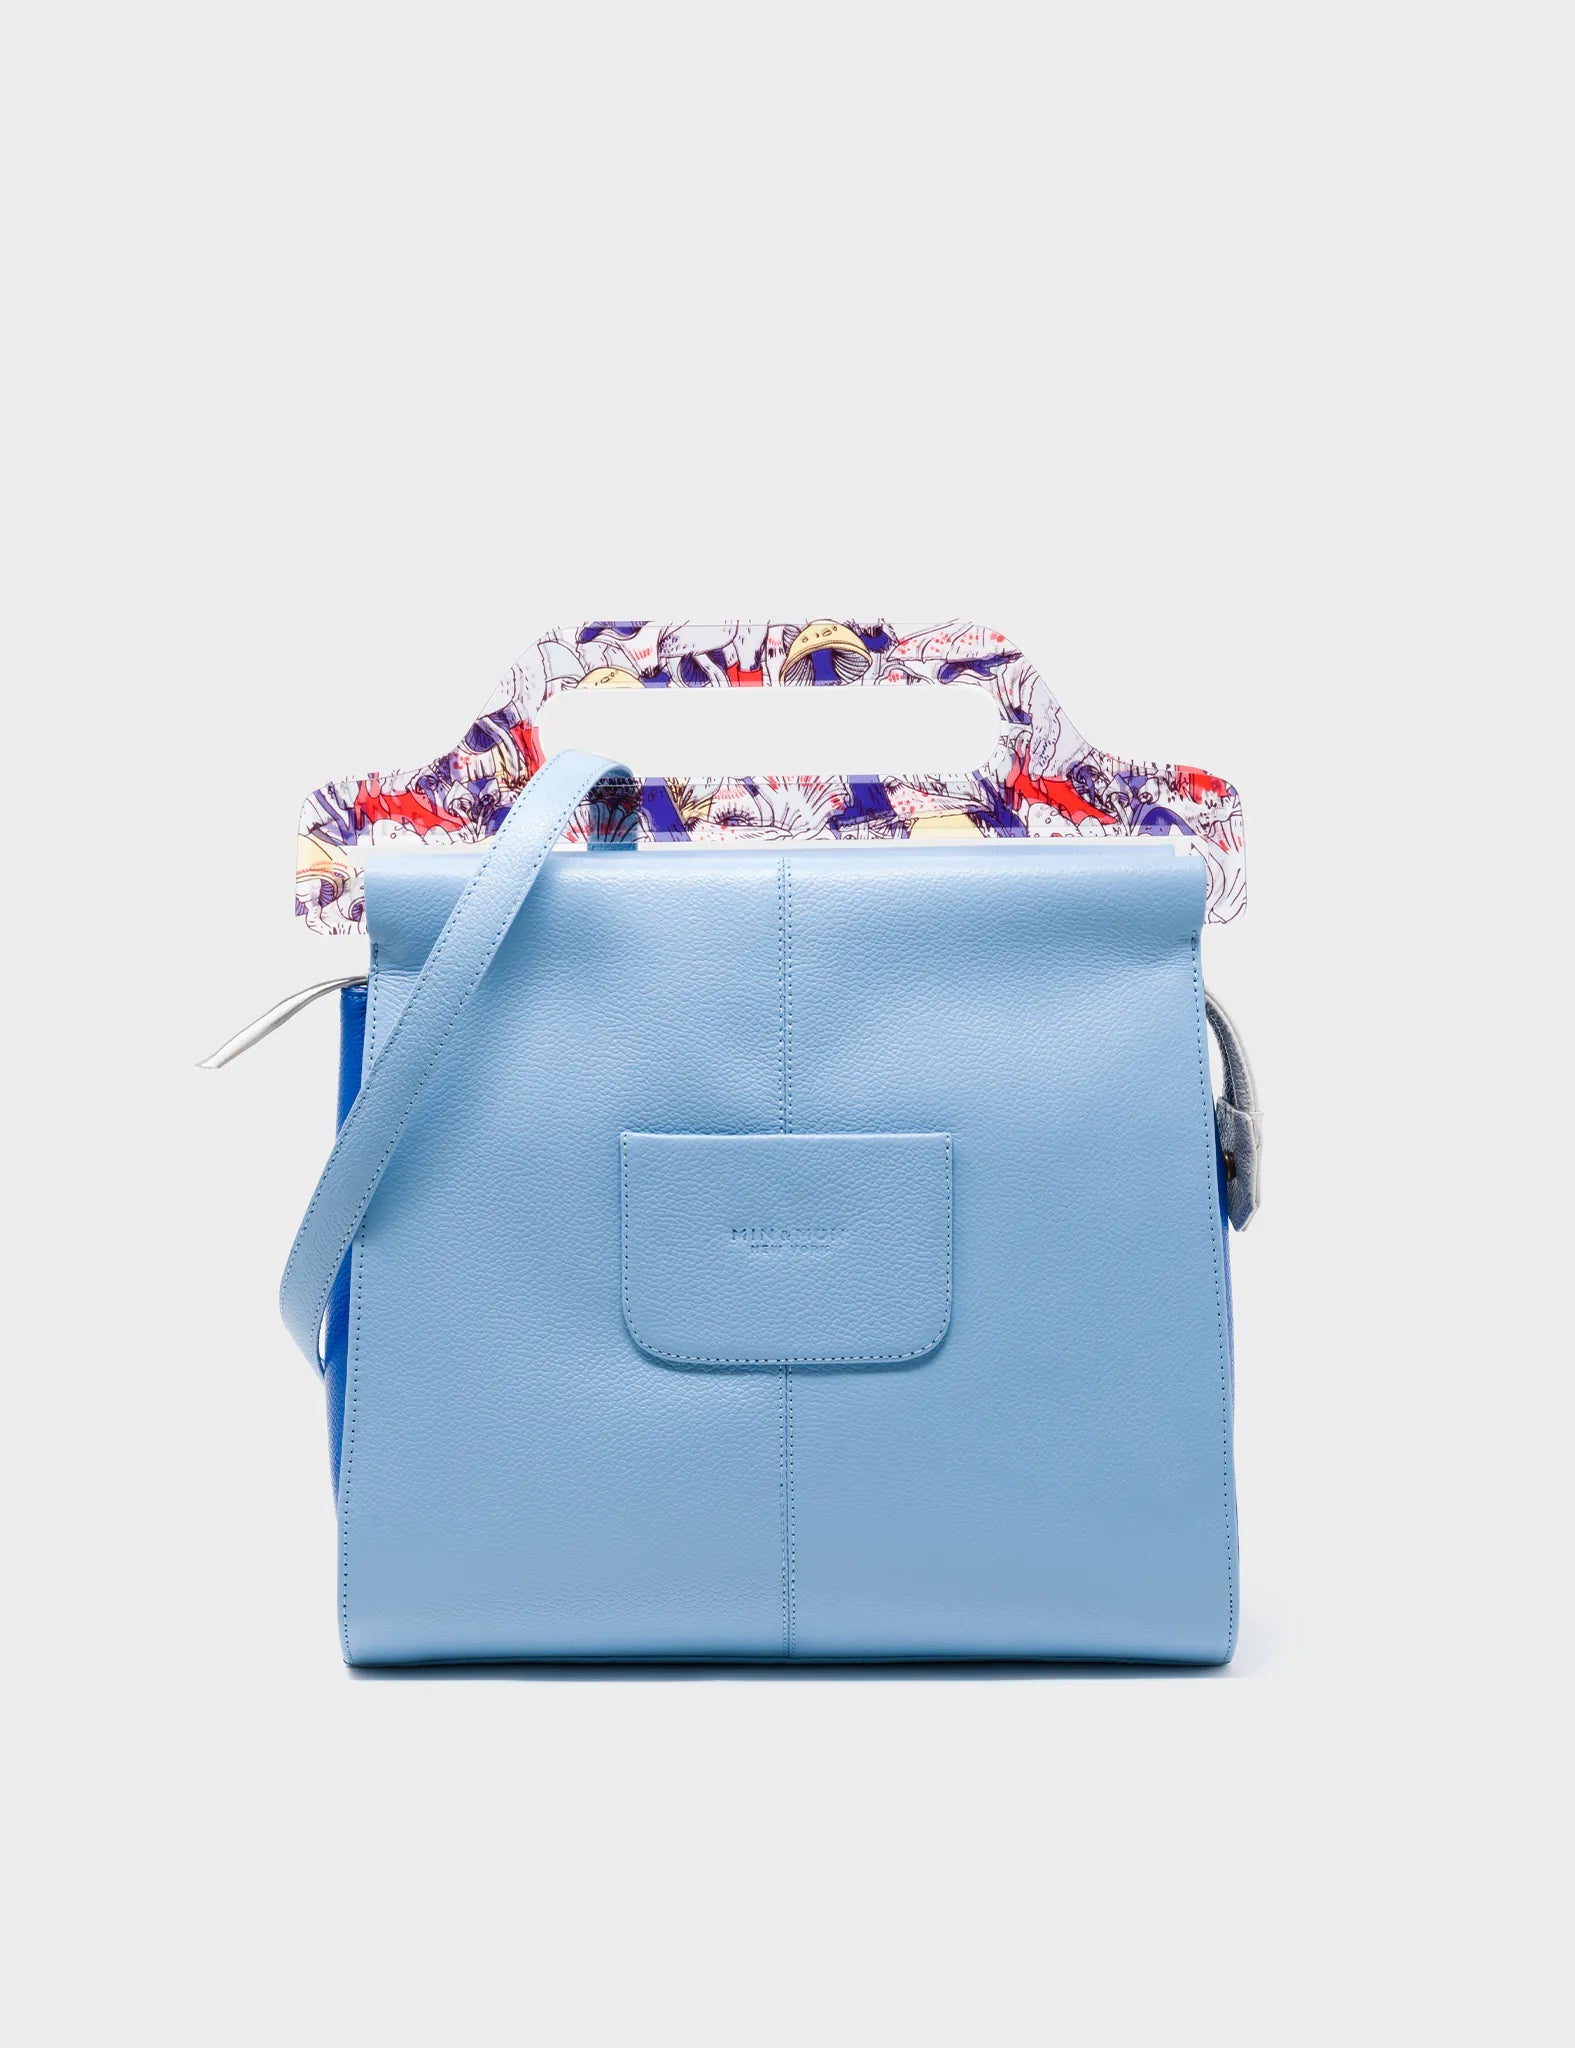 NWT Michael Kors Kenly Medium Backpack Bag Pebble Leather in Light Sky Blue  | eBay